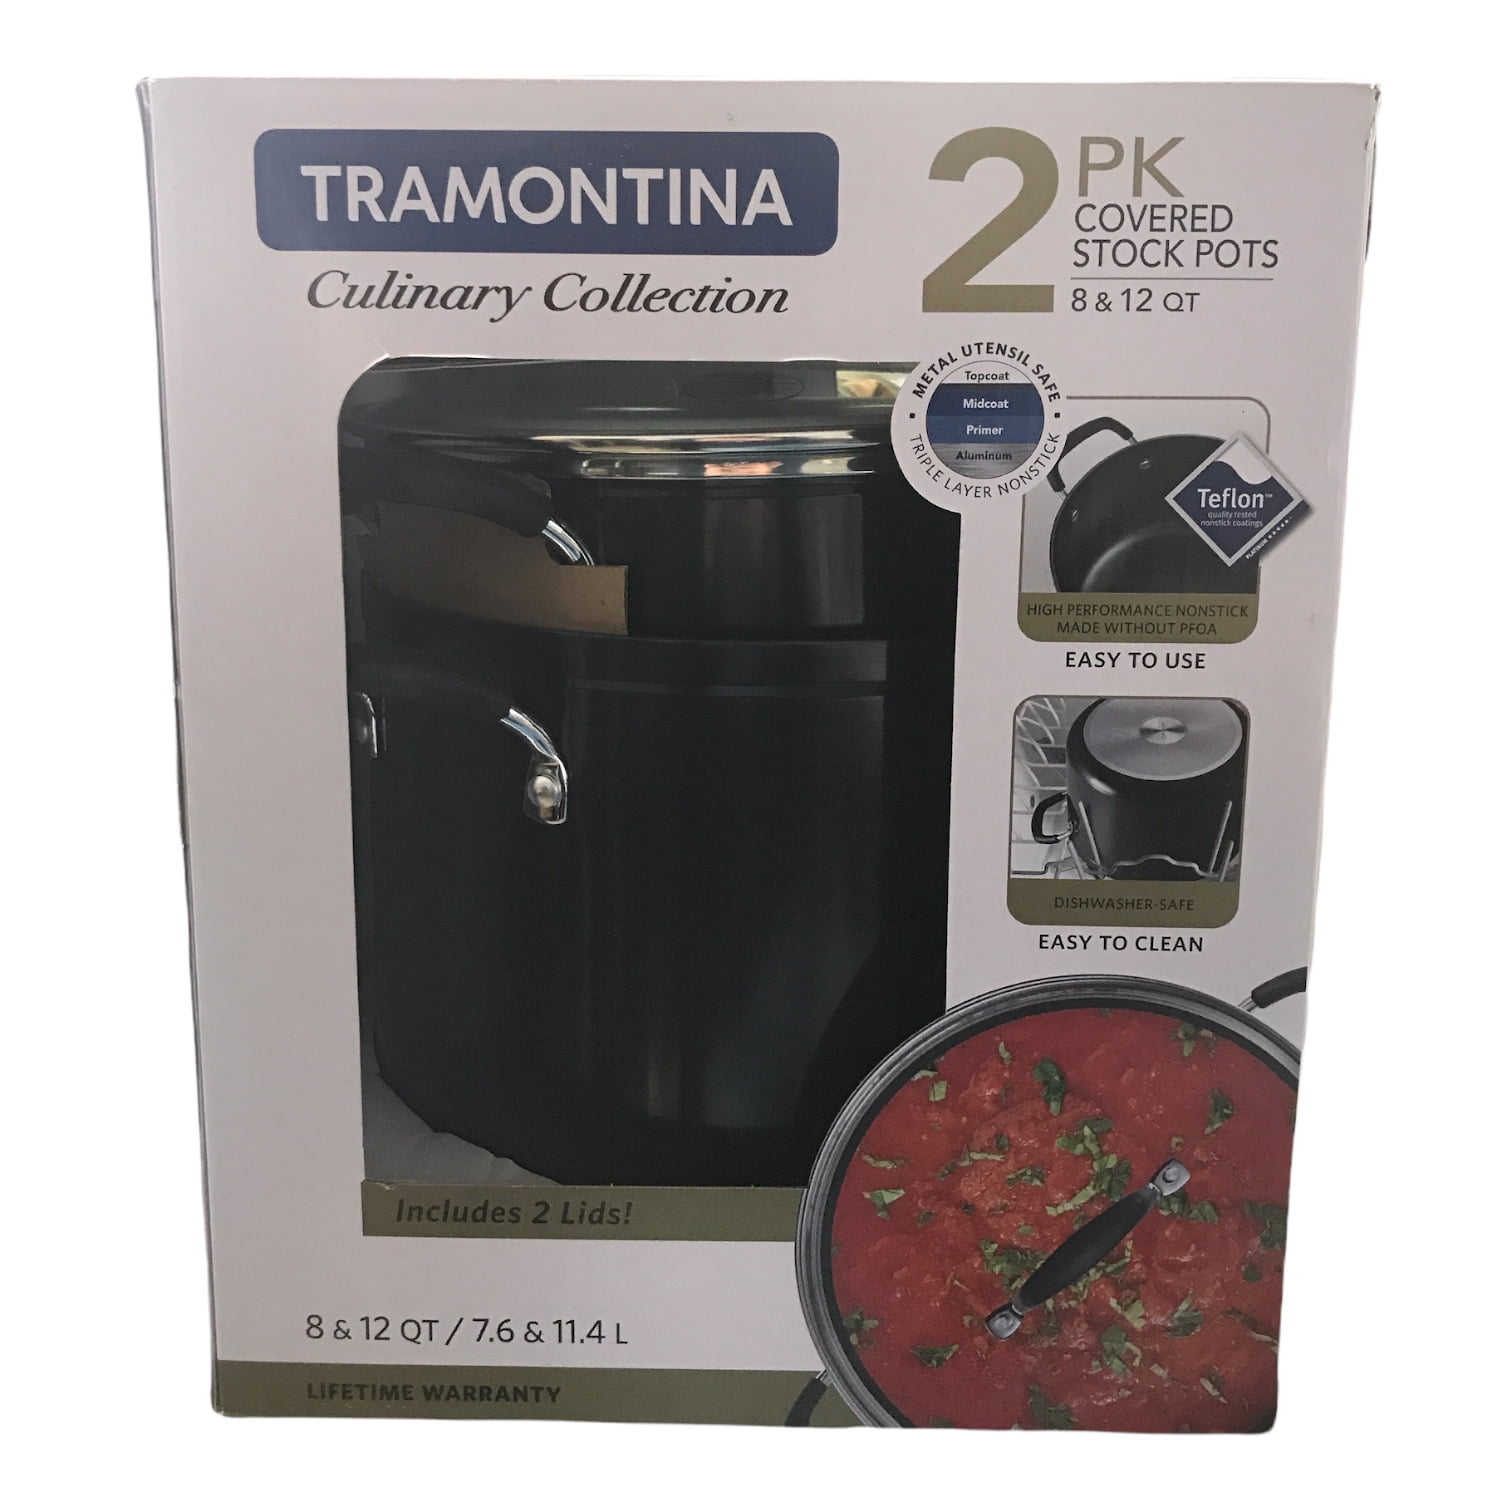 Tramontina Fiora 4.25 Qt Multipurpose Ceramic Non-Stick 5 Pcs. Cookware Set  - Gray